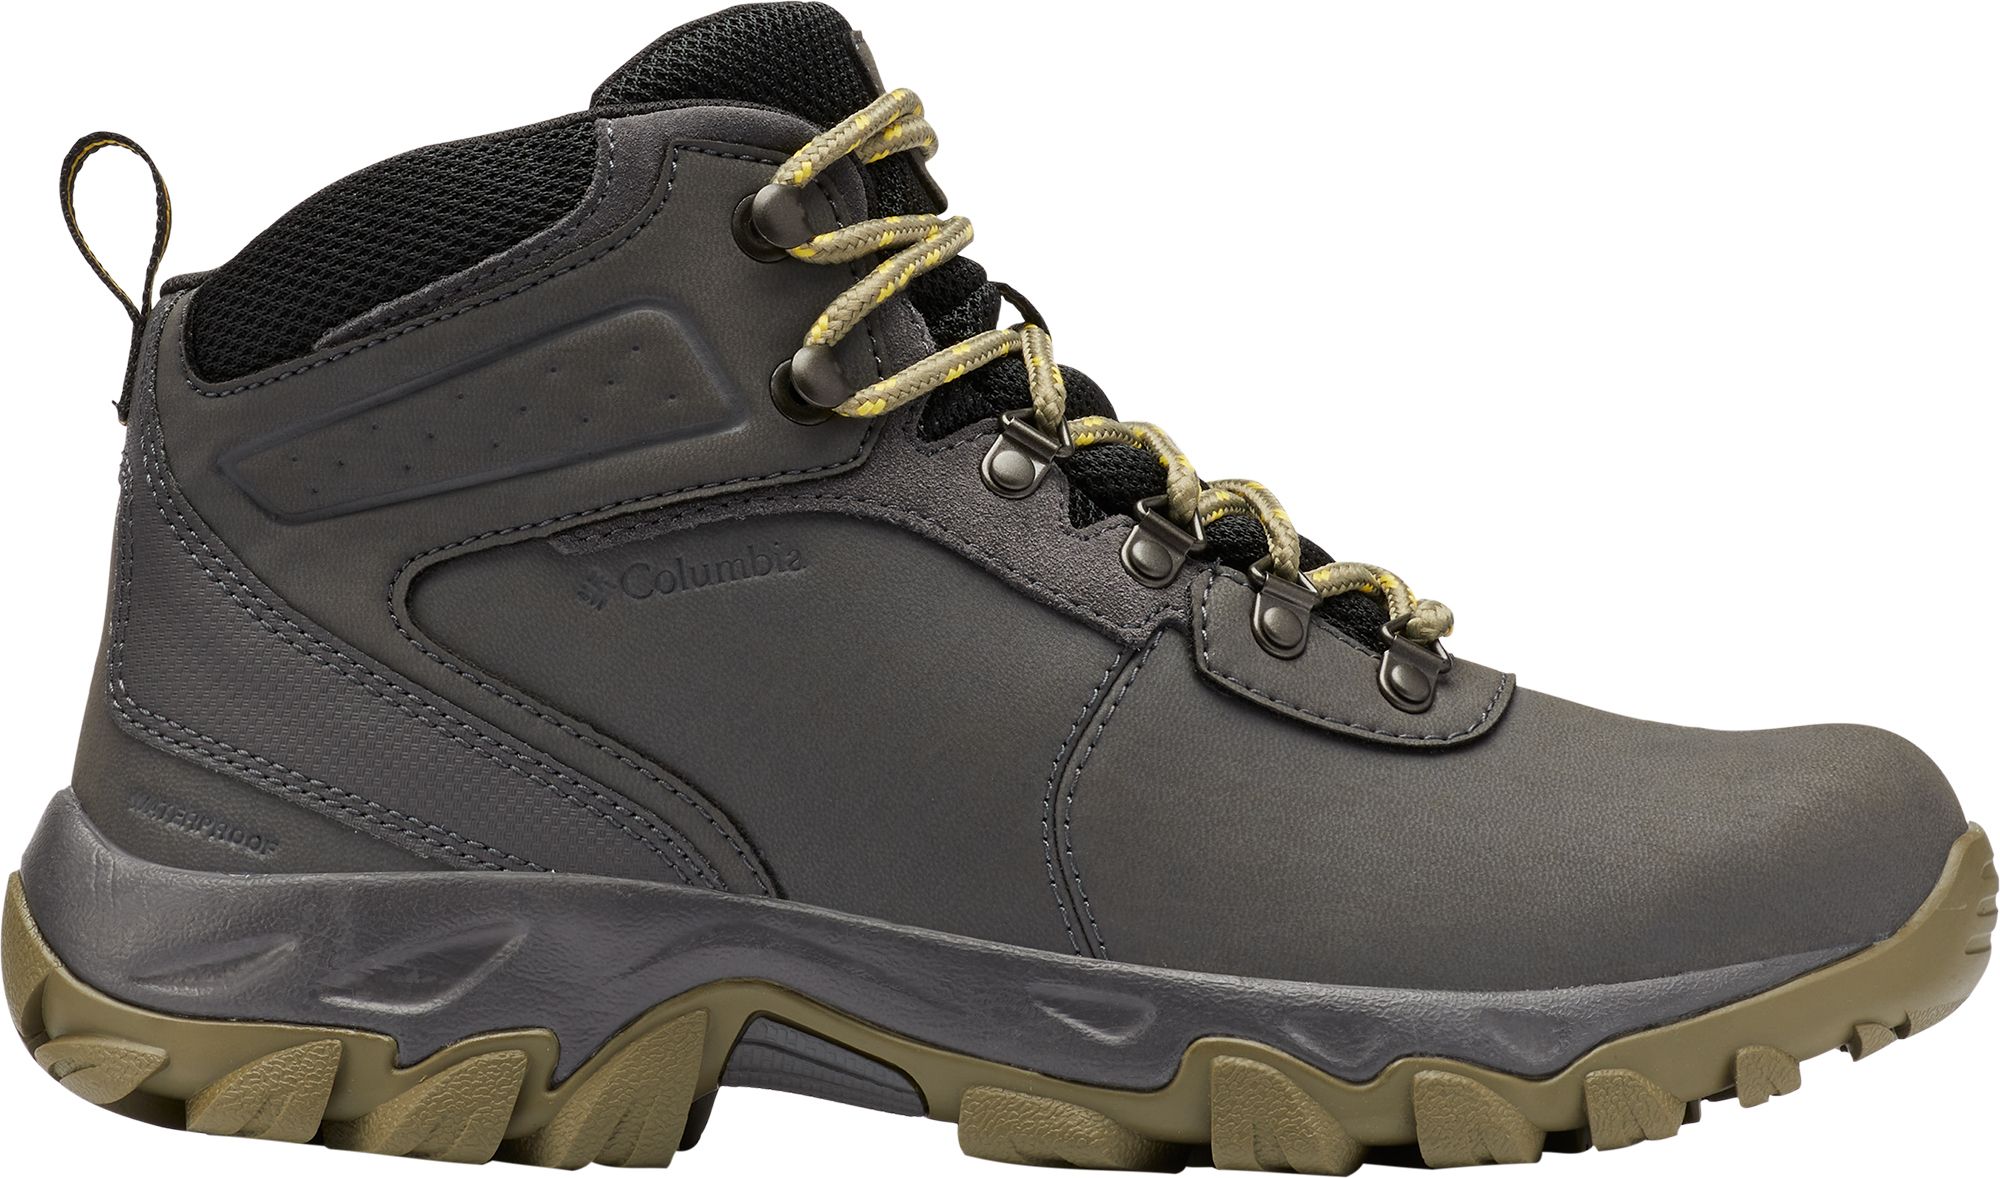 Photos - Trekking Shoes Columbia Men's Newton Ridge Plus II Waterproof Hiking Boots, Size 14, Dark 